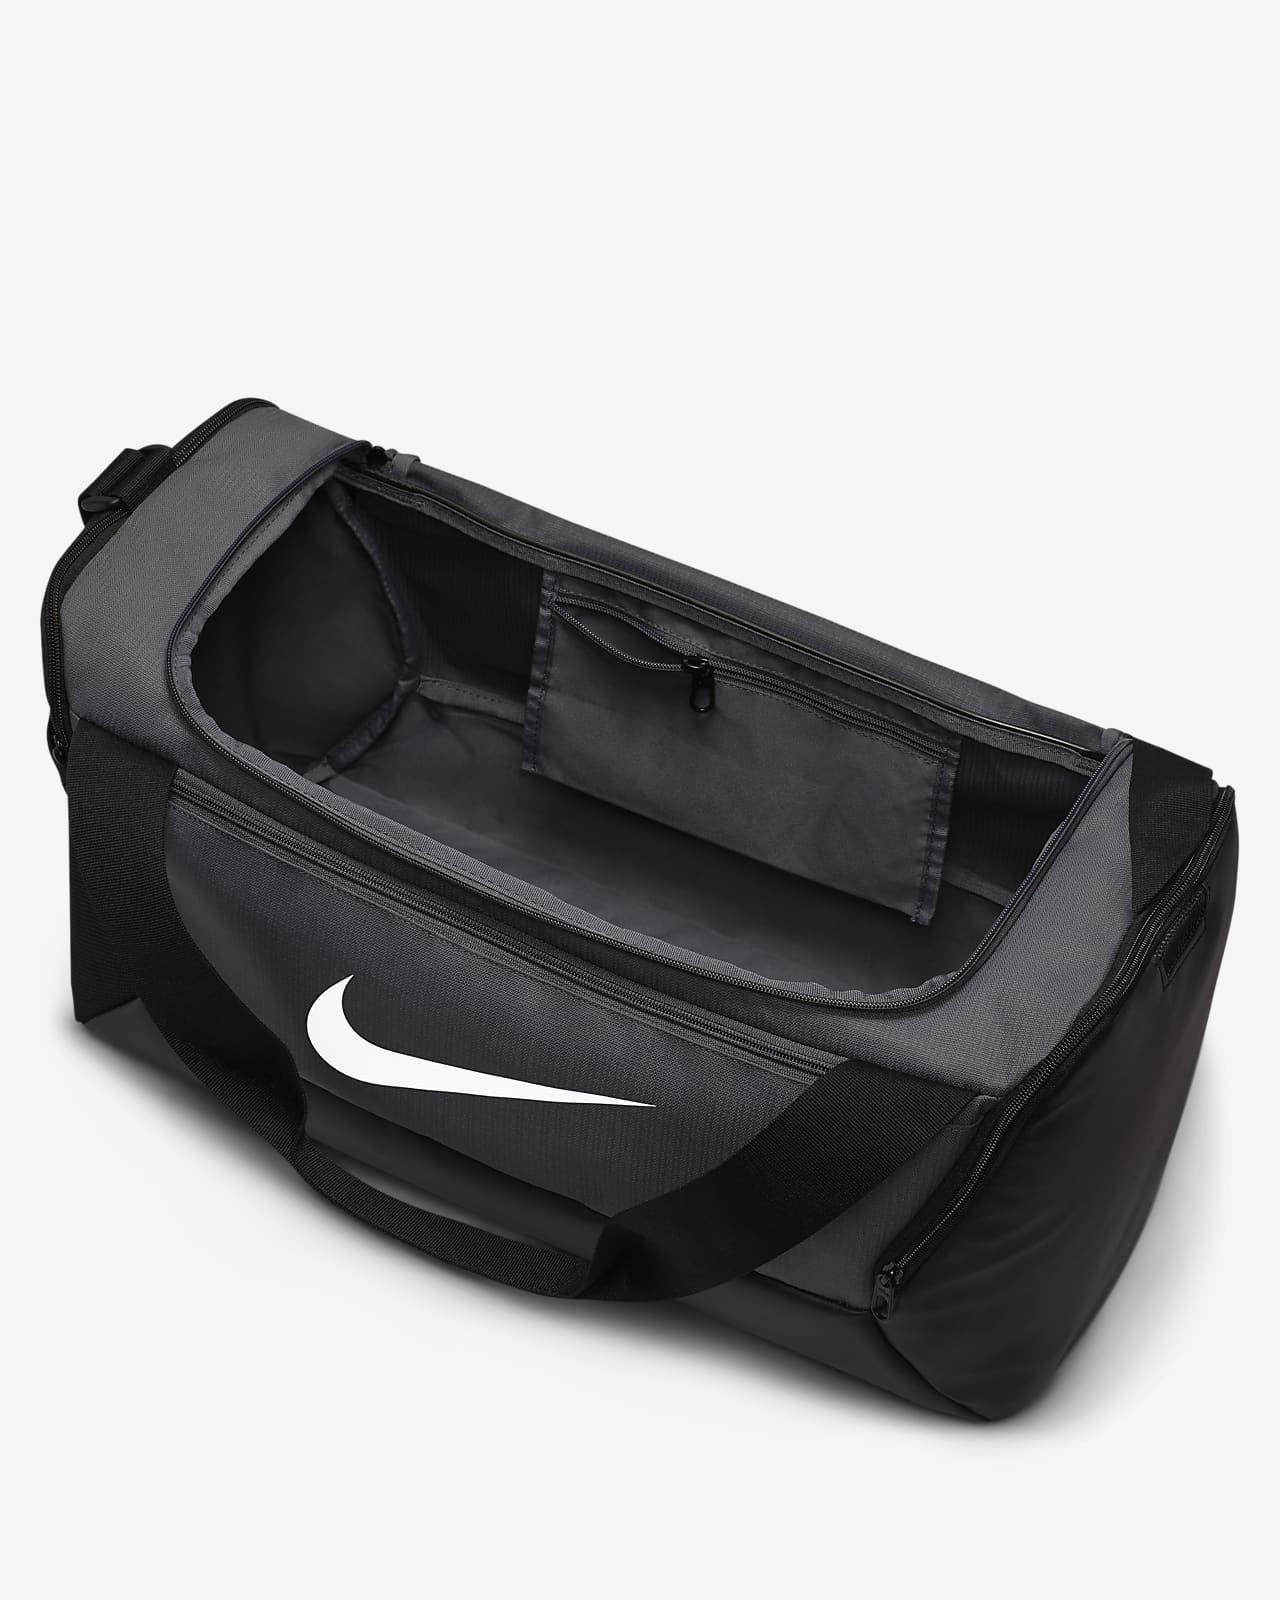  Nike Brasilia Small Training Duffel Bag : Clothing